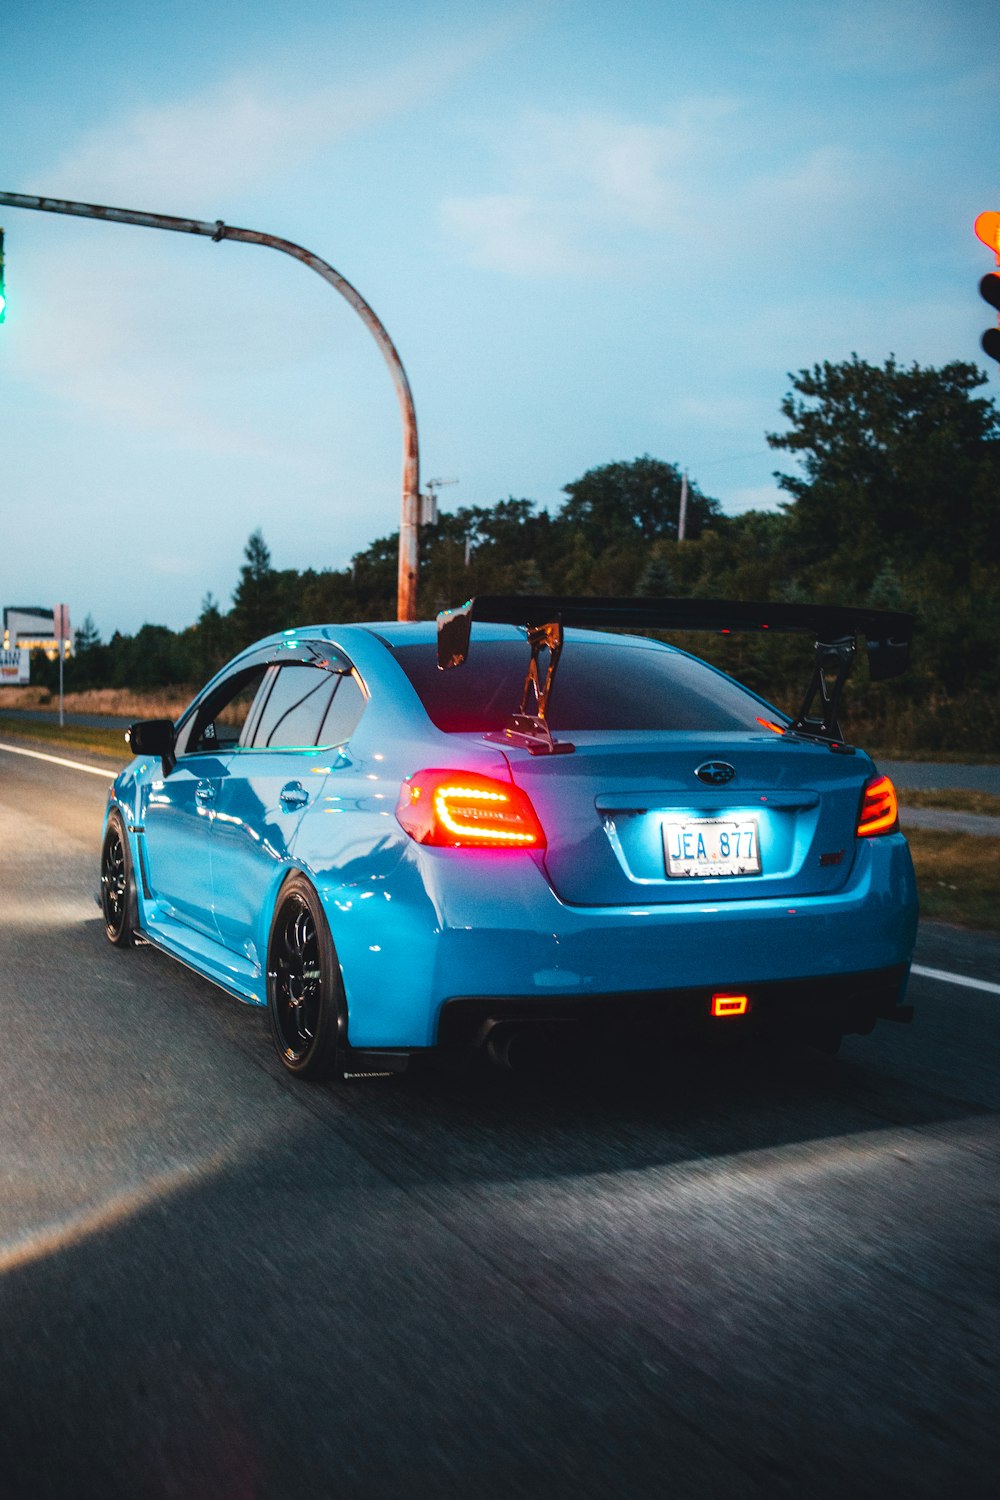 a blue sports car on a road